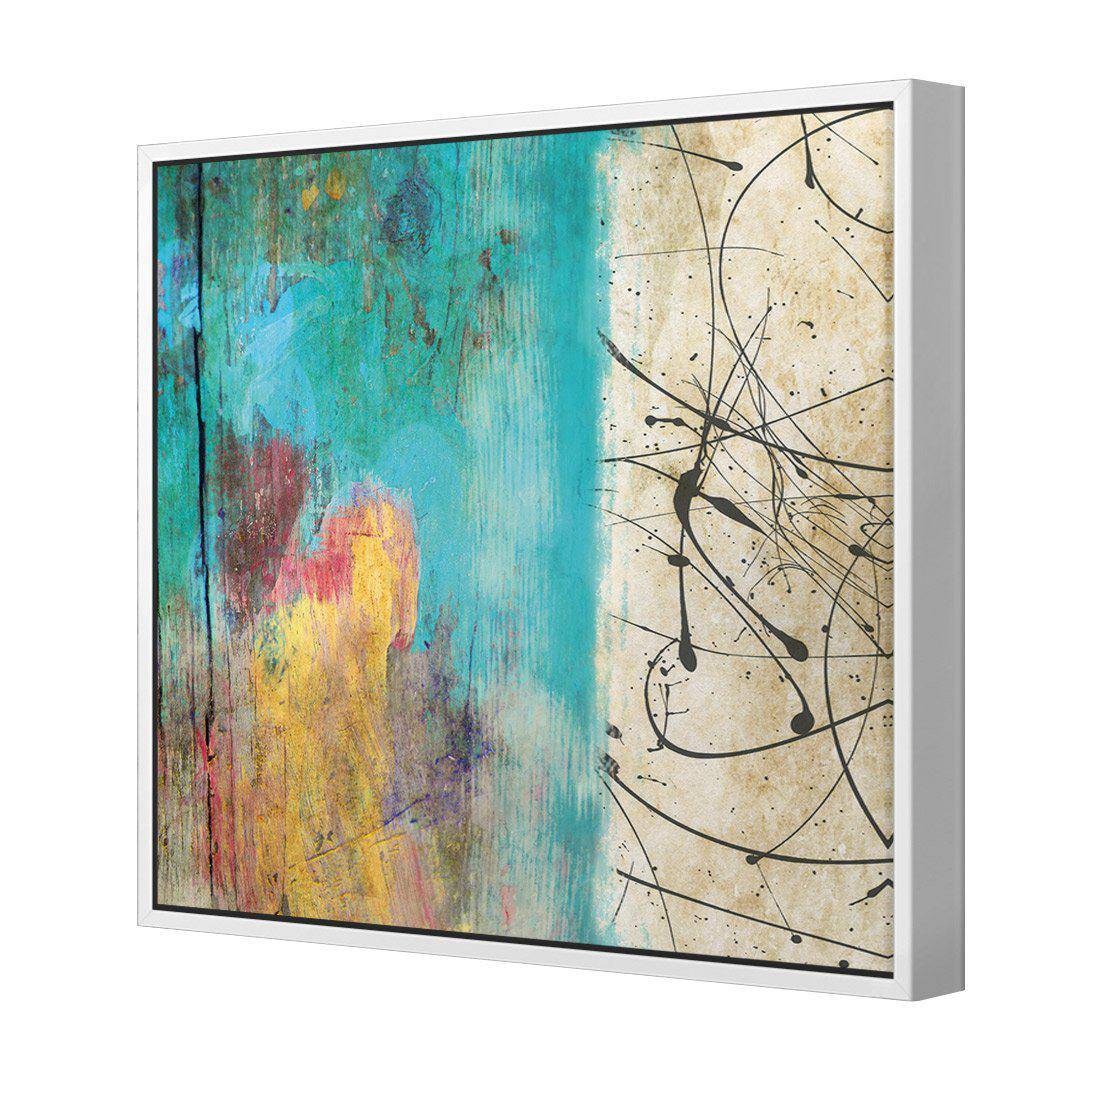 Painted Grunge Splatter Canvas Art-Canvas-Wall Art Designs-30x30cm-Canvas - White Frame-Wall Art Designs